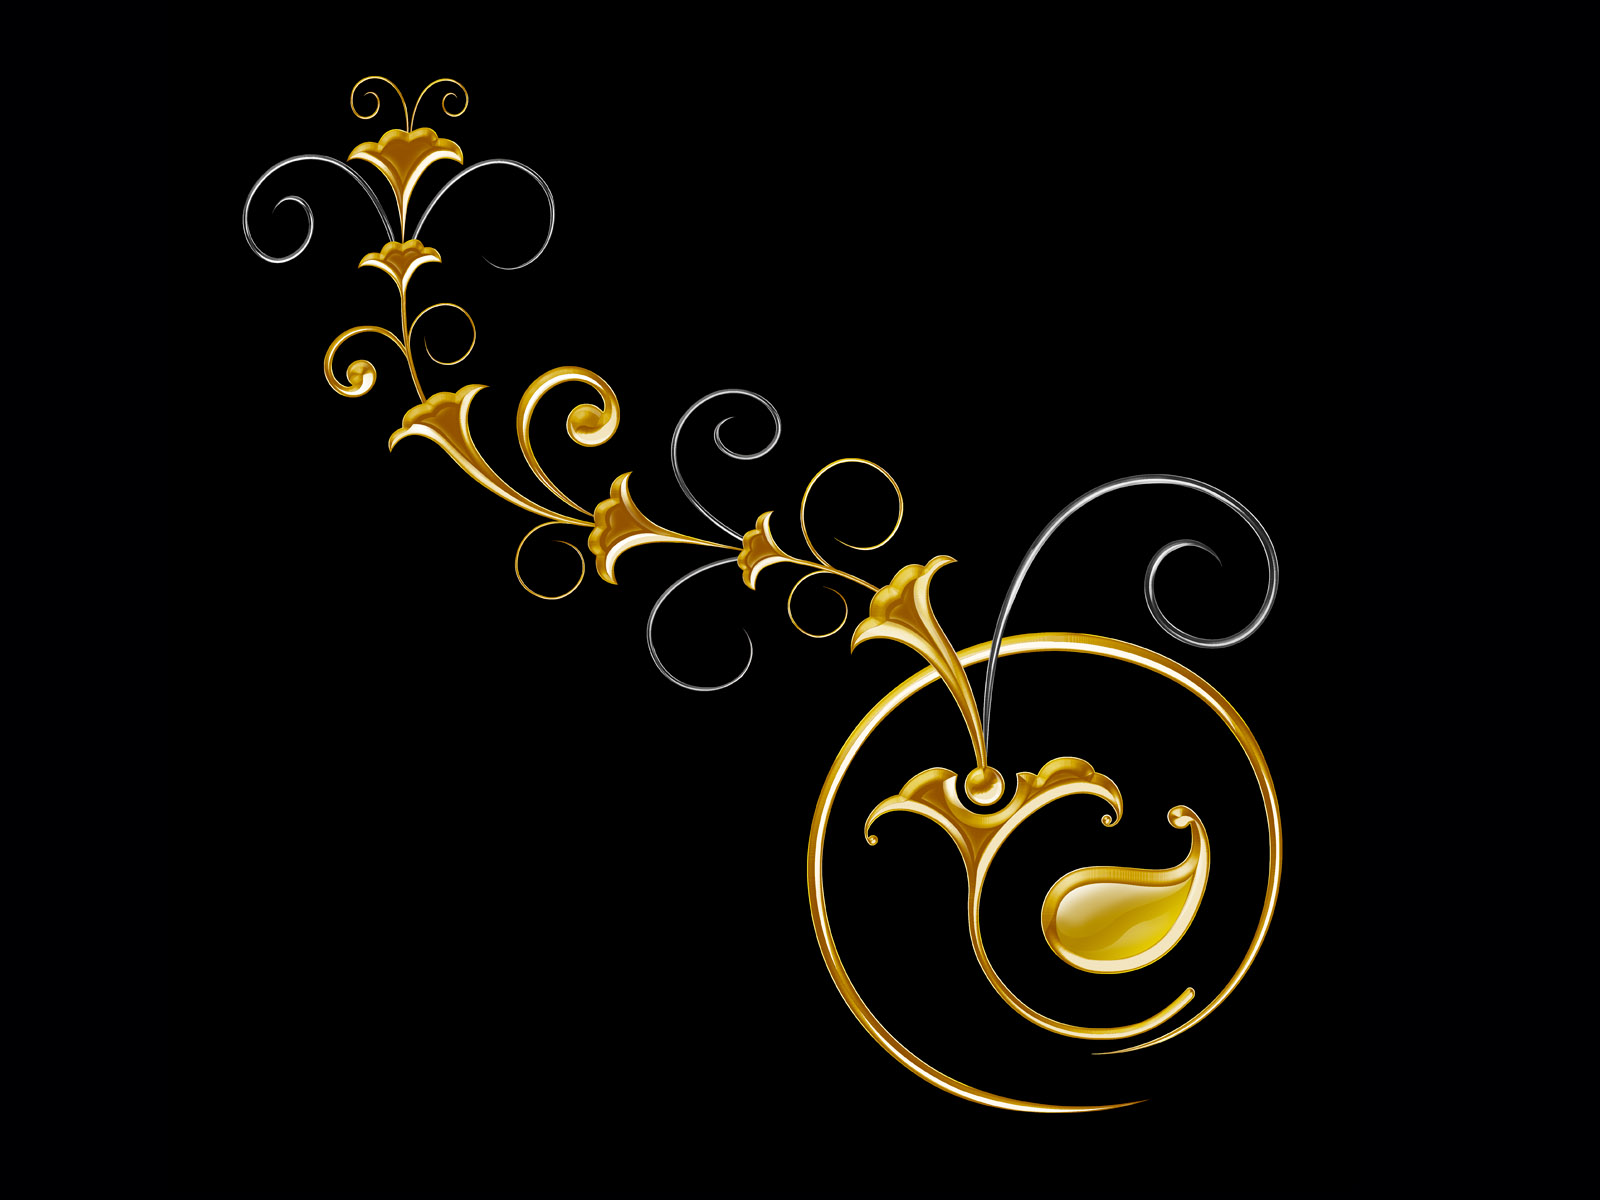 Free download Fractal Wallpaper wallpaper golden flower fractal wallpaper [1600x1200] for your Desktop, Mobile & Tablet. Explore Gold Flower Wallpaper. Green Flower Wallpaper, Wallpaper with Small Red Flowers, Gold Floral Wallpaper